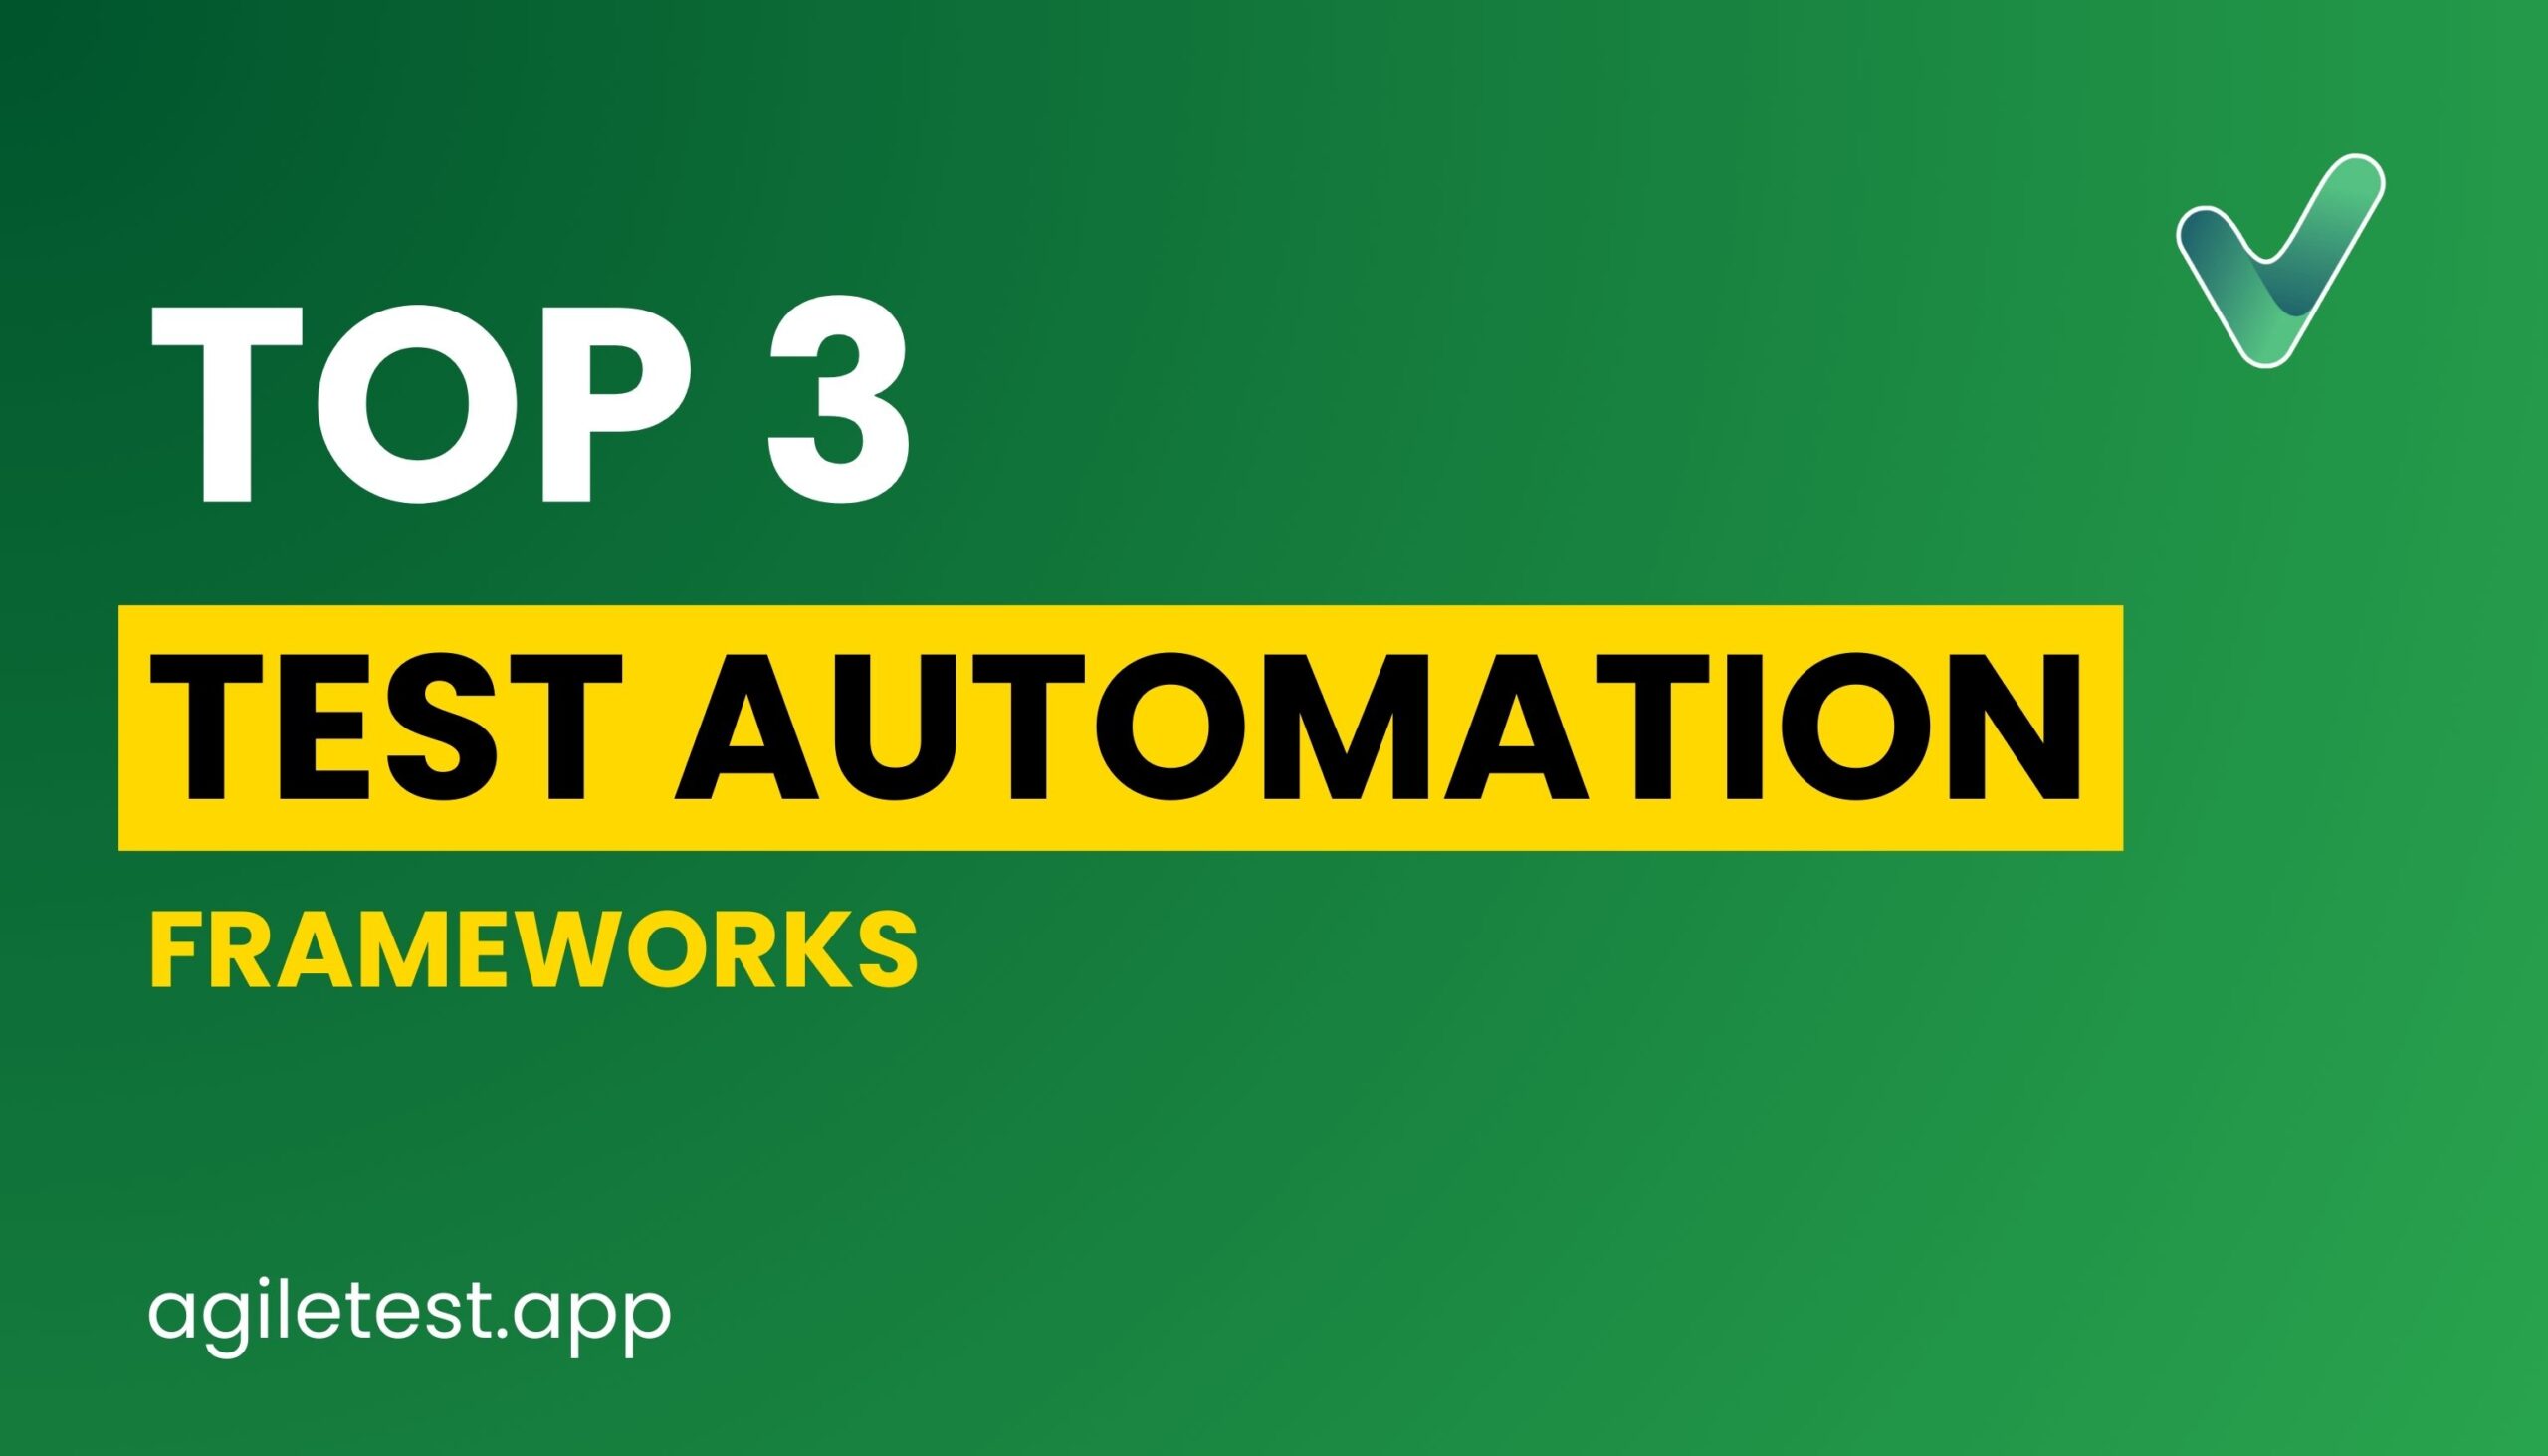 Top 3 Test Automation Frameworks